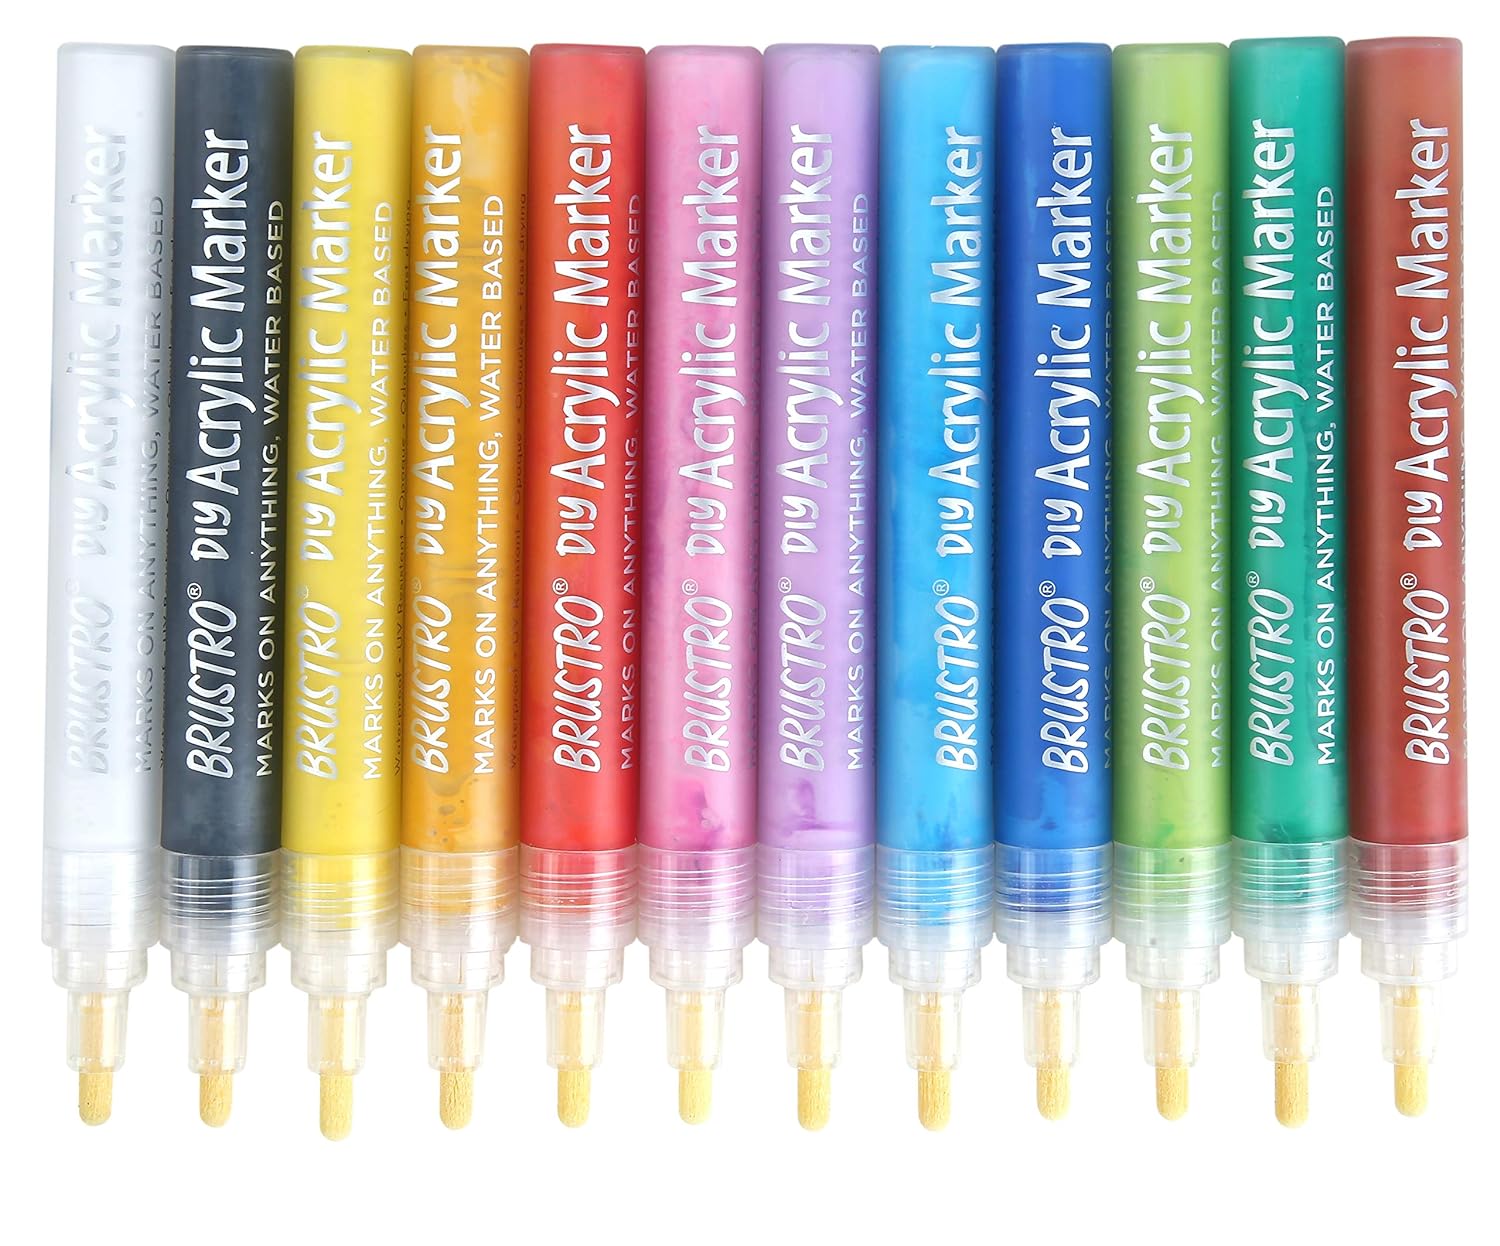 BRUSTRO (DIY Acrylic Marker Set of 12 Vibrant Colours